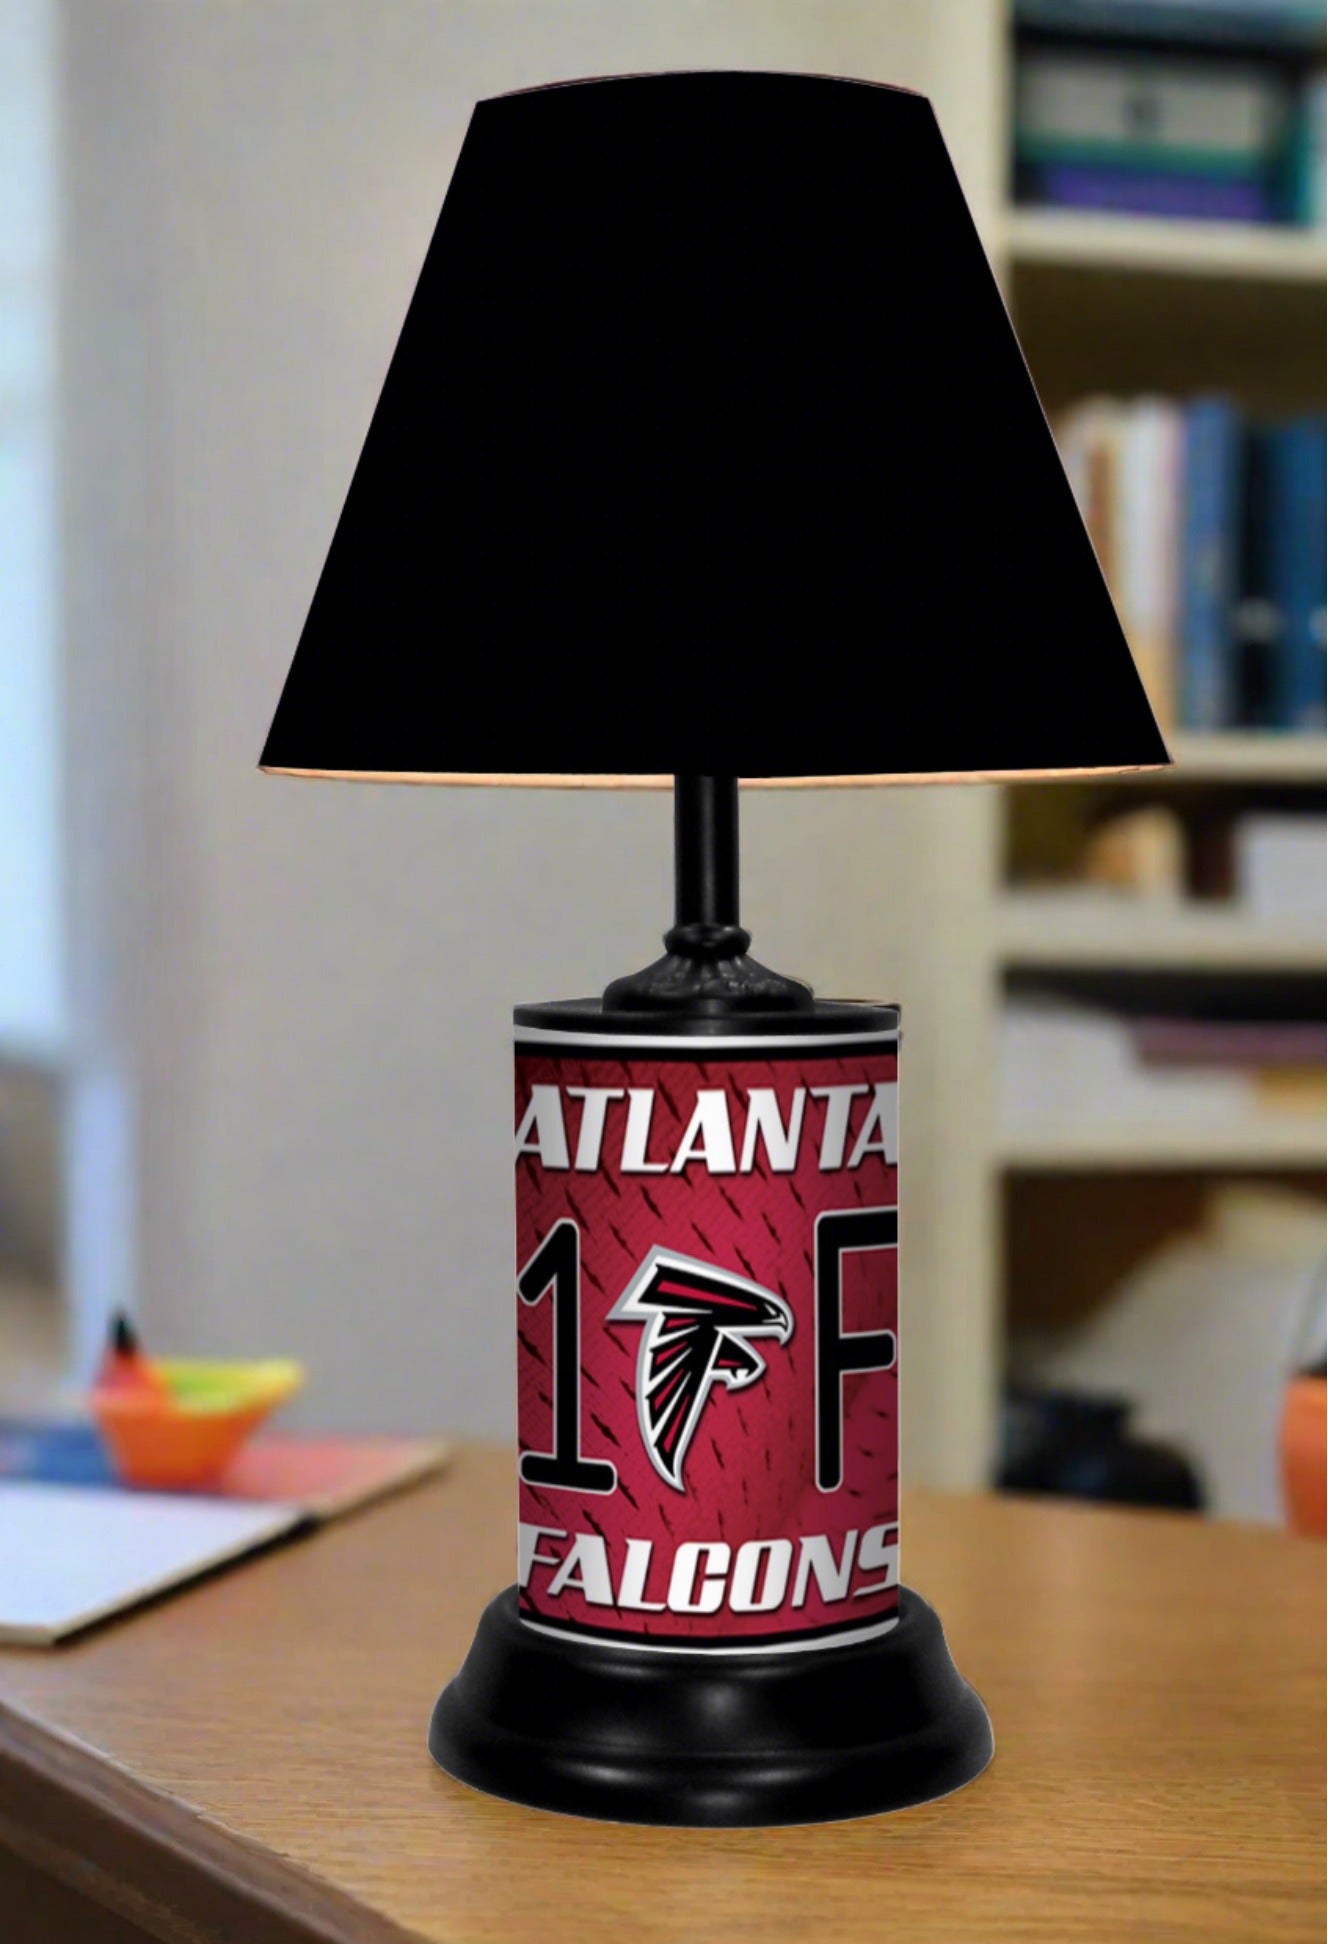 Atlanta Falcons #1 Fan Lamp with Shade by GTEI